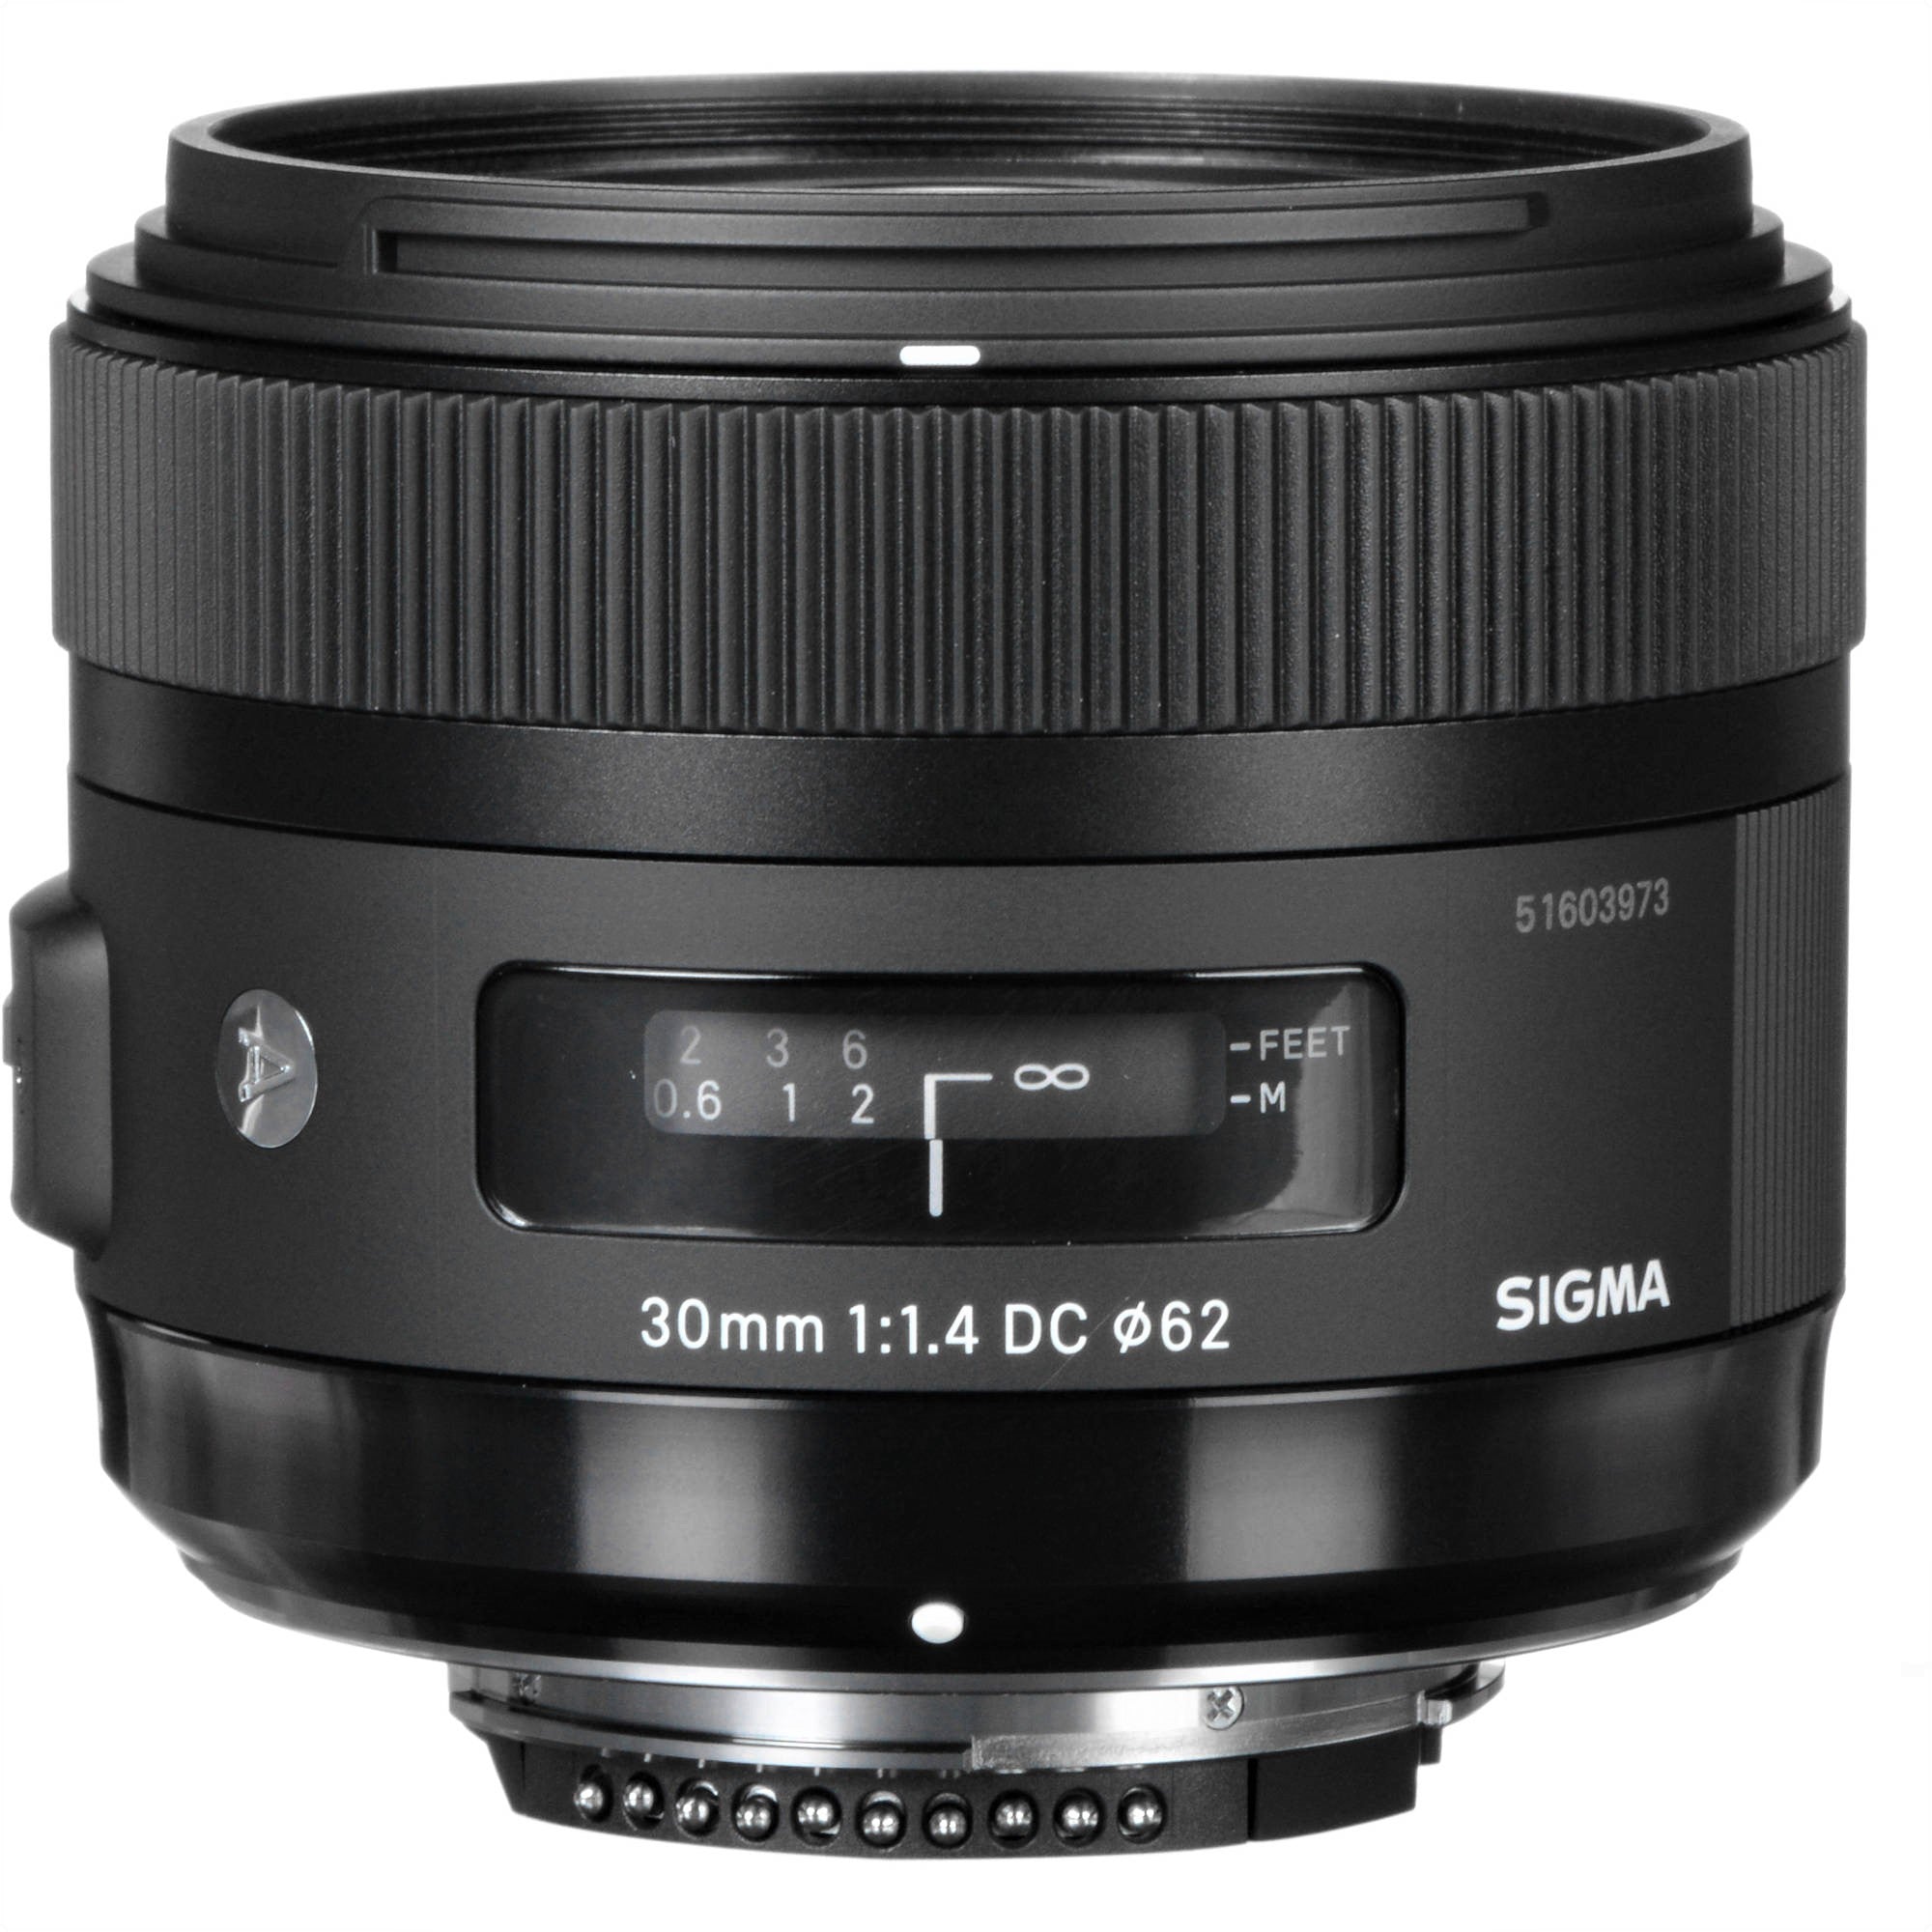 Sigma 30mm F1.4 DC HSM Art Lens for Nikon F